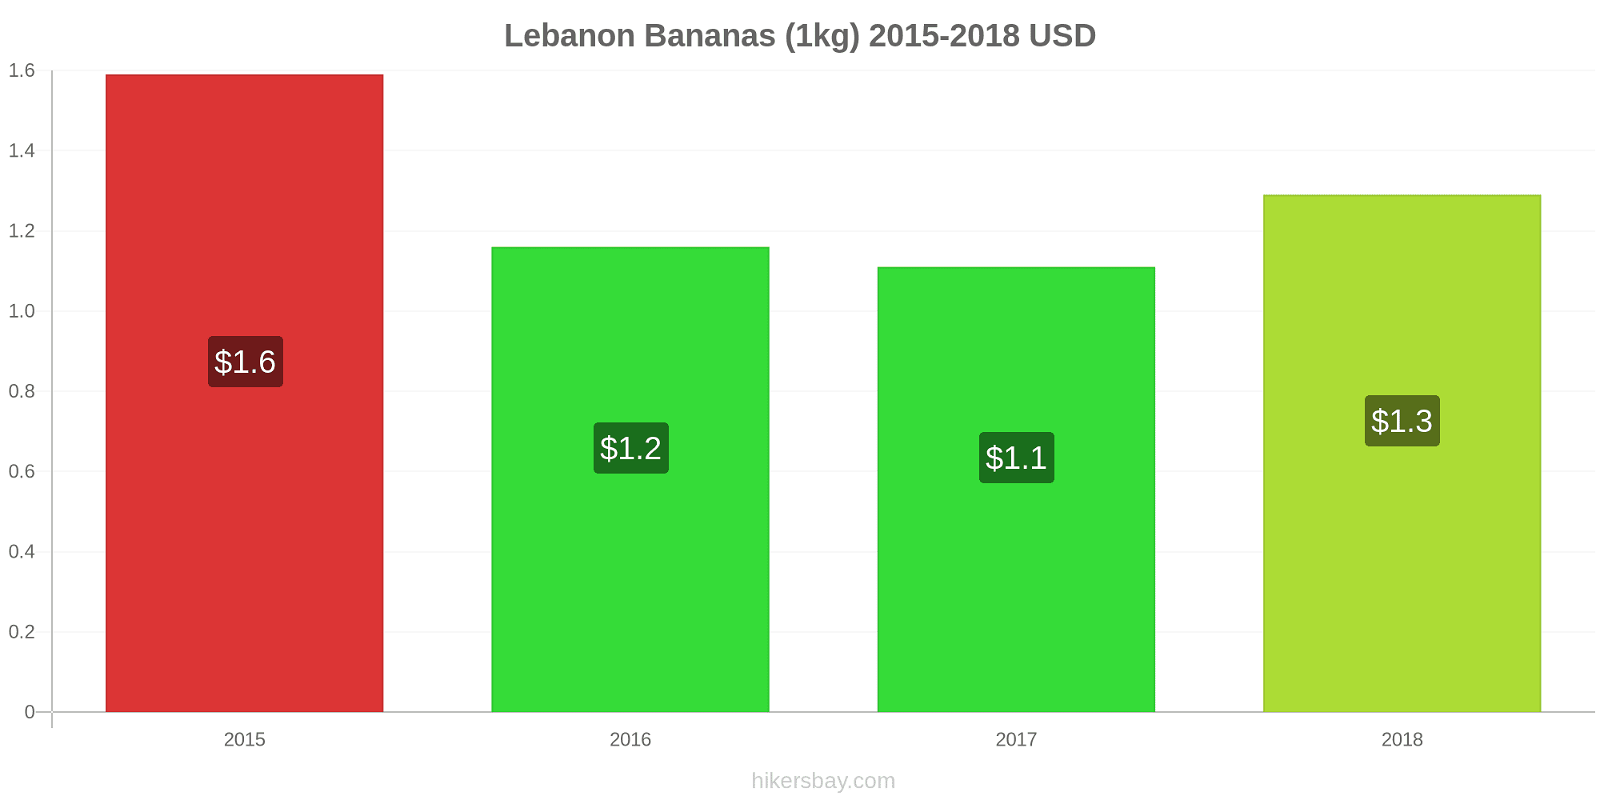 Lebanon price changes Bananas (1kg) hikersbay.com